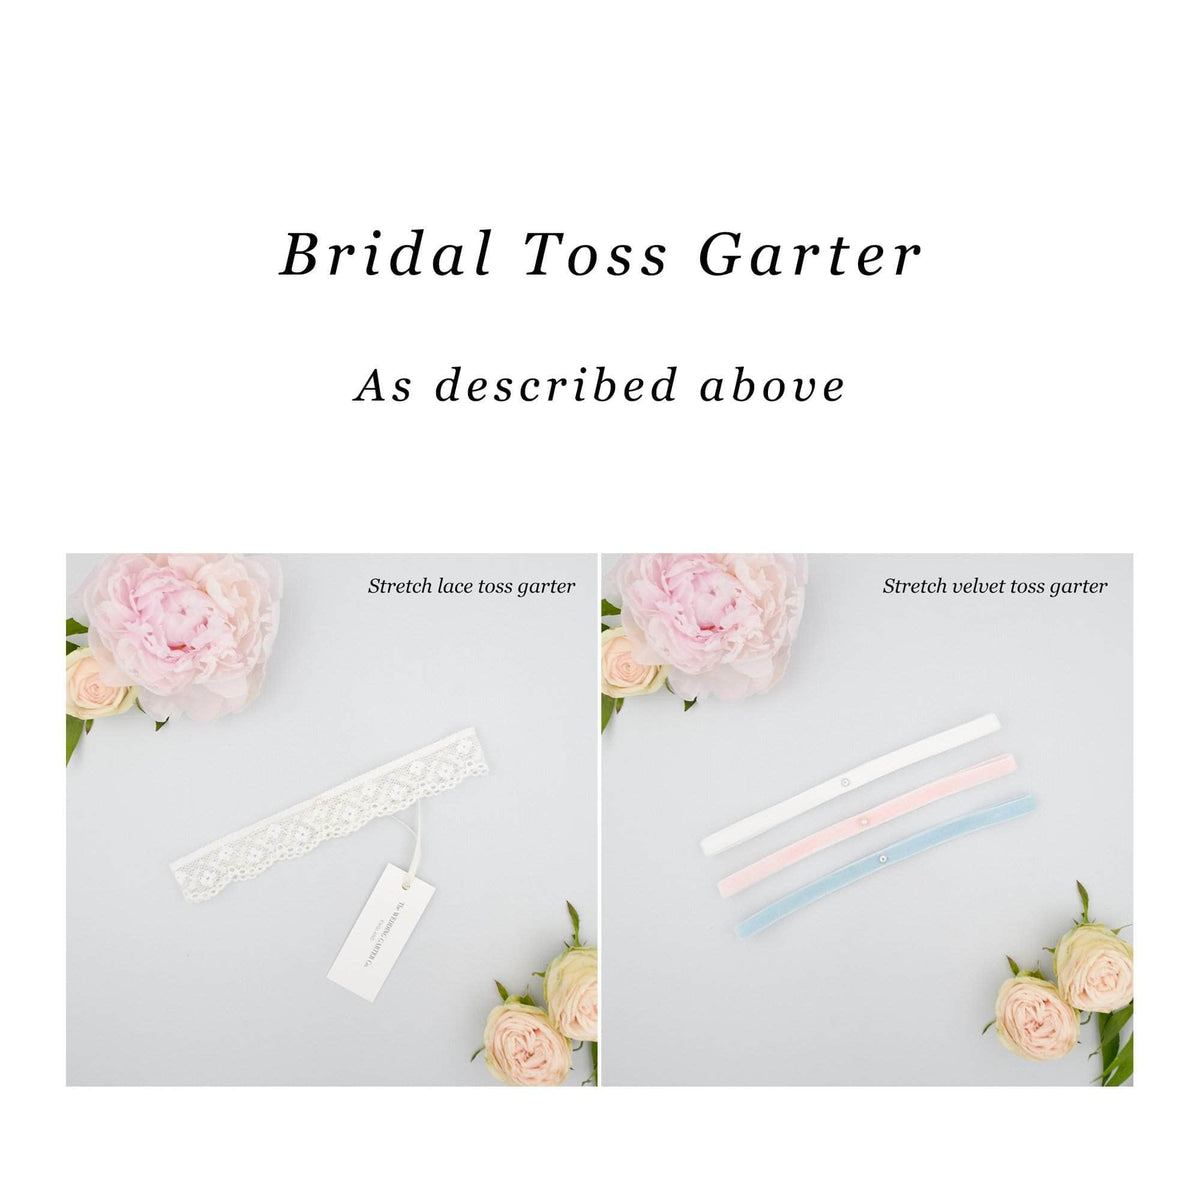 Wedding Garter As described above Bridal tossgarter